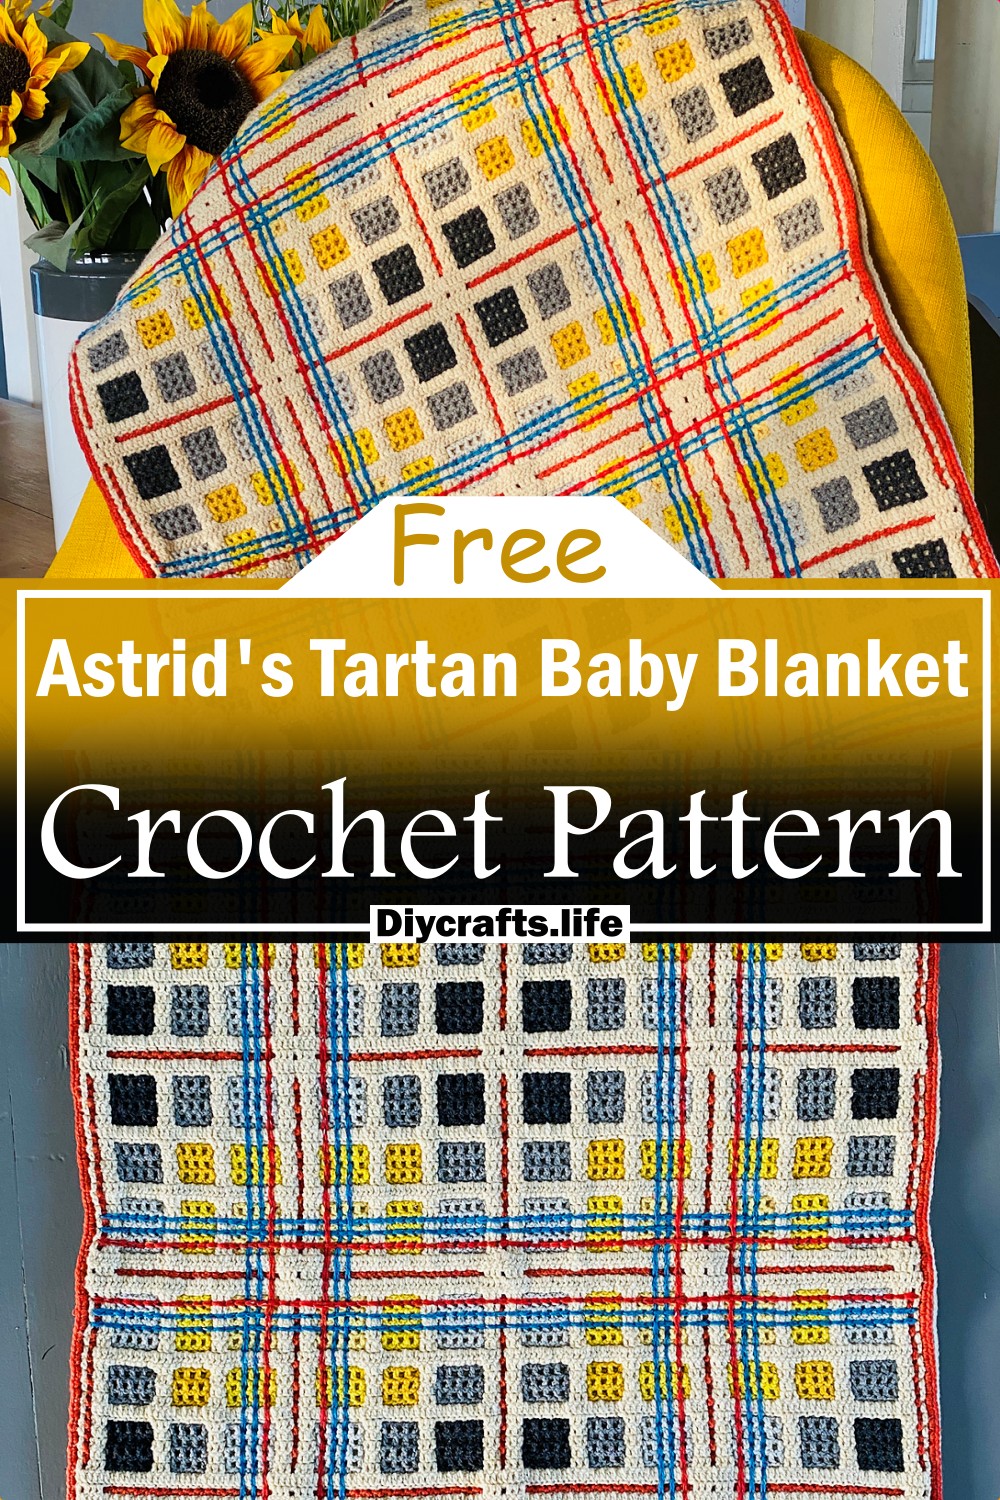 Astrid's Tartan Baby Blanket